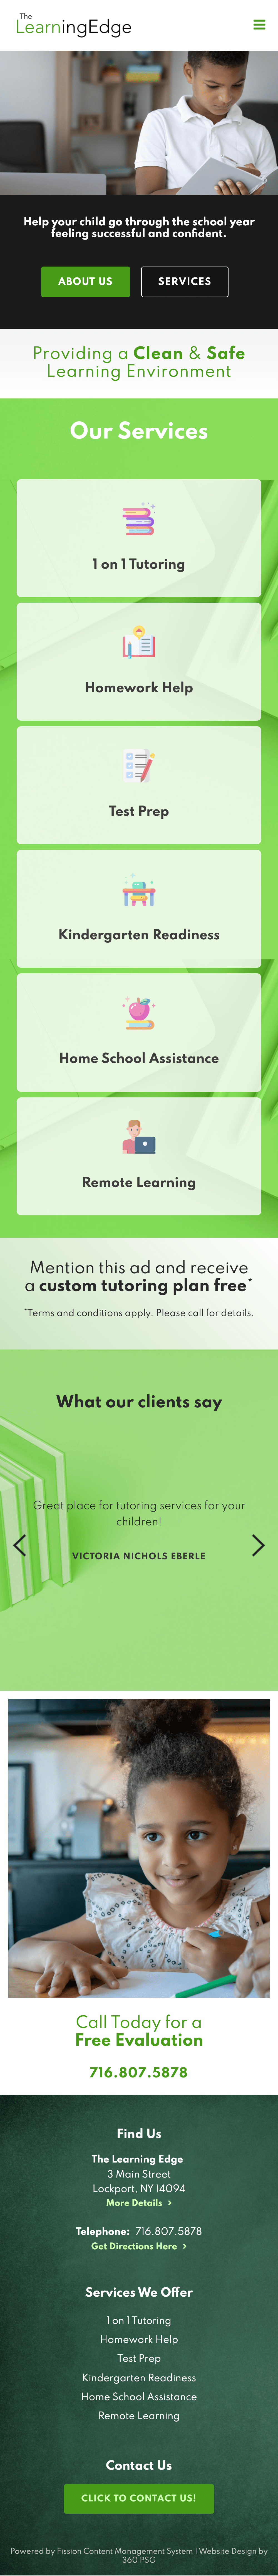 The Learning Edge Website - Mobile